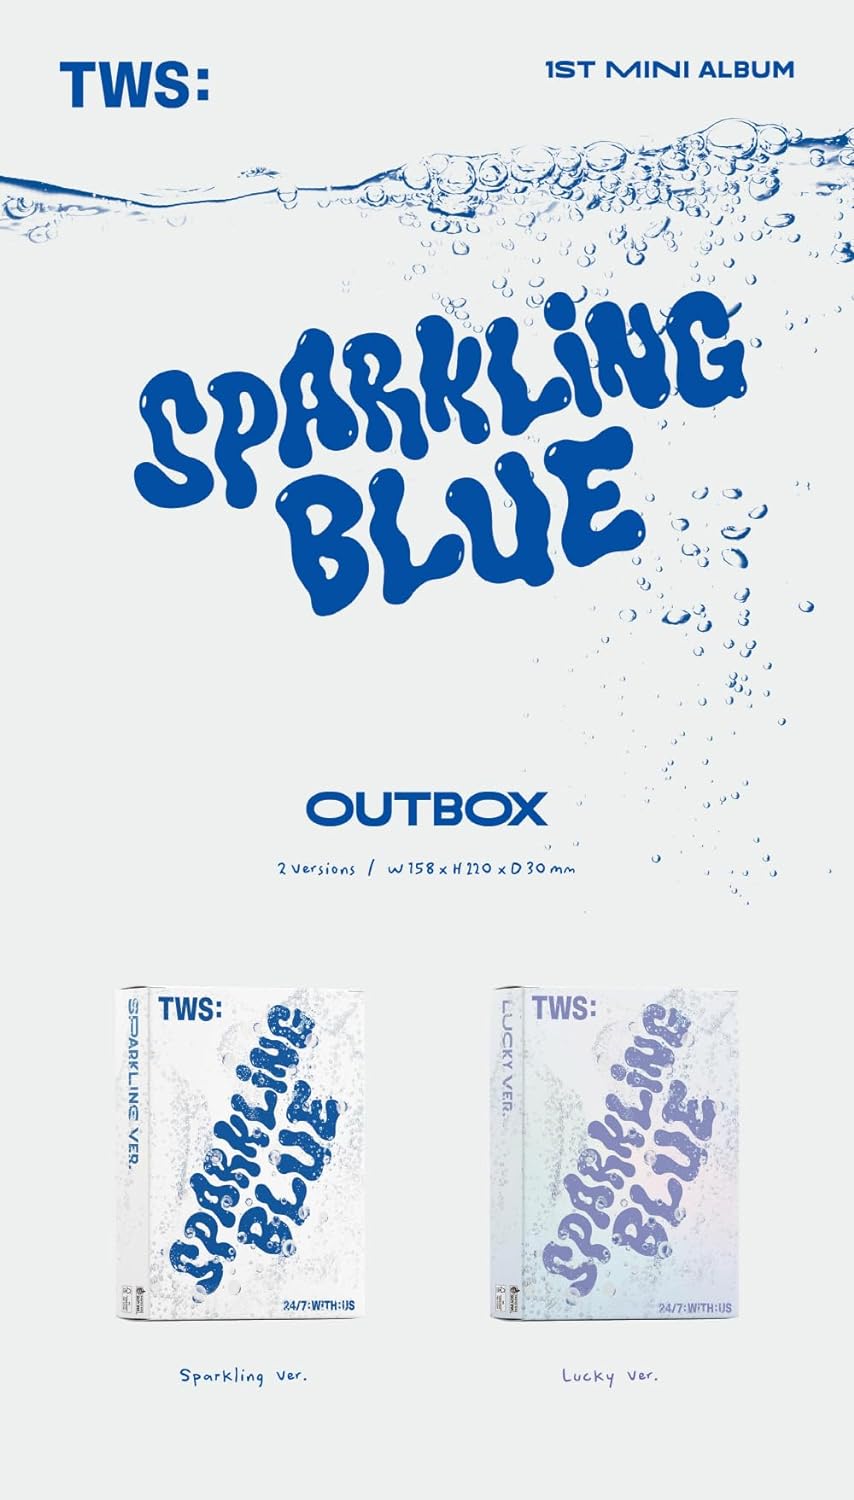 TWS - 1st Mini Album [Sparkling Blue] (Sparkling ver.)